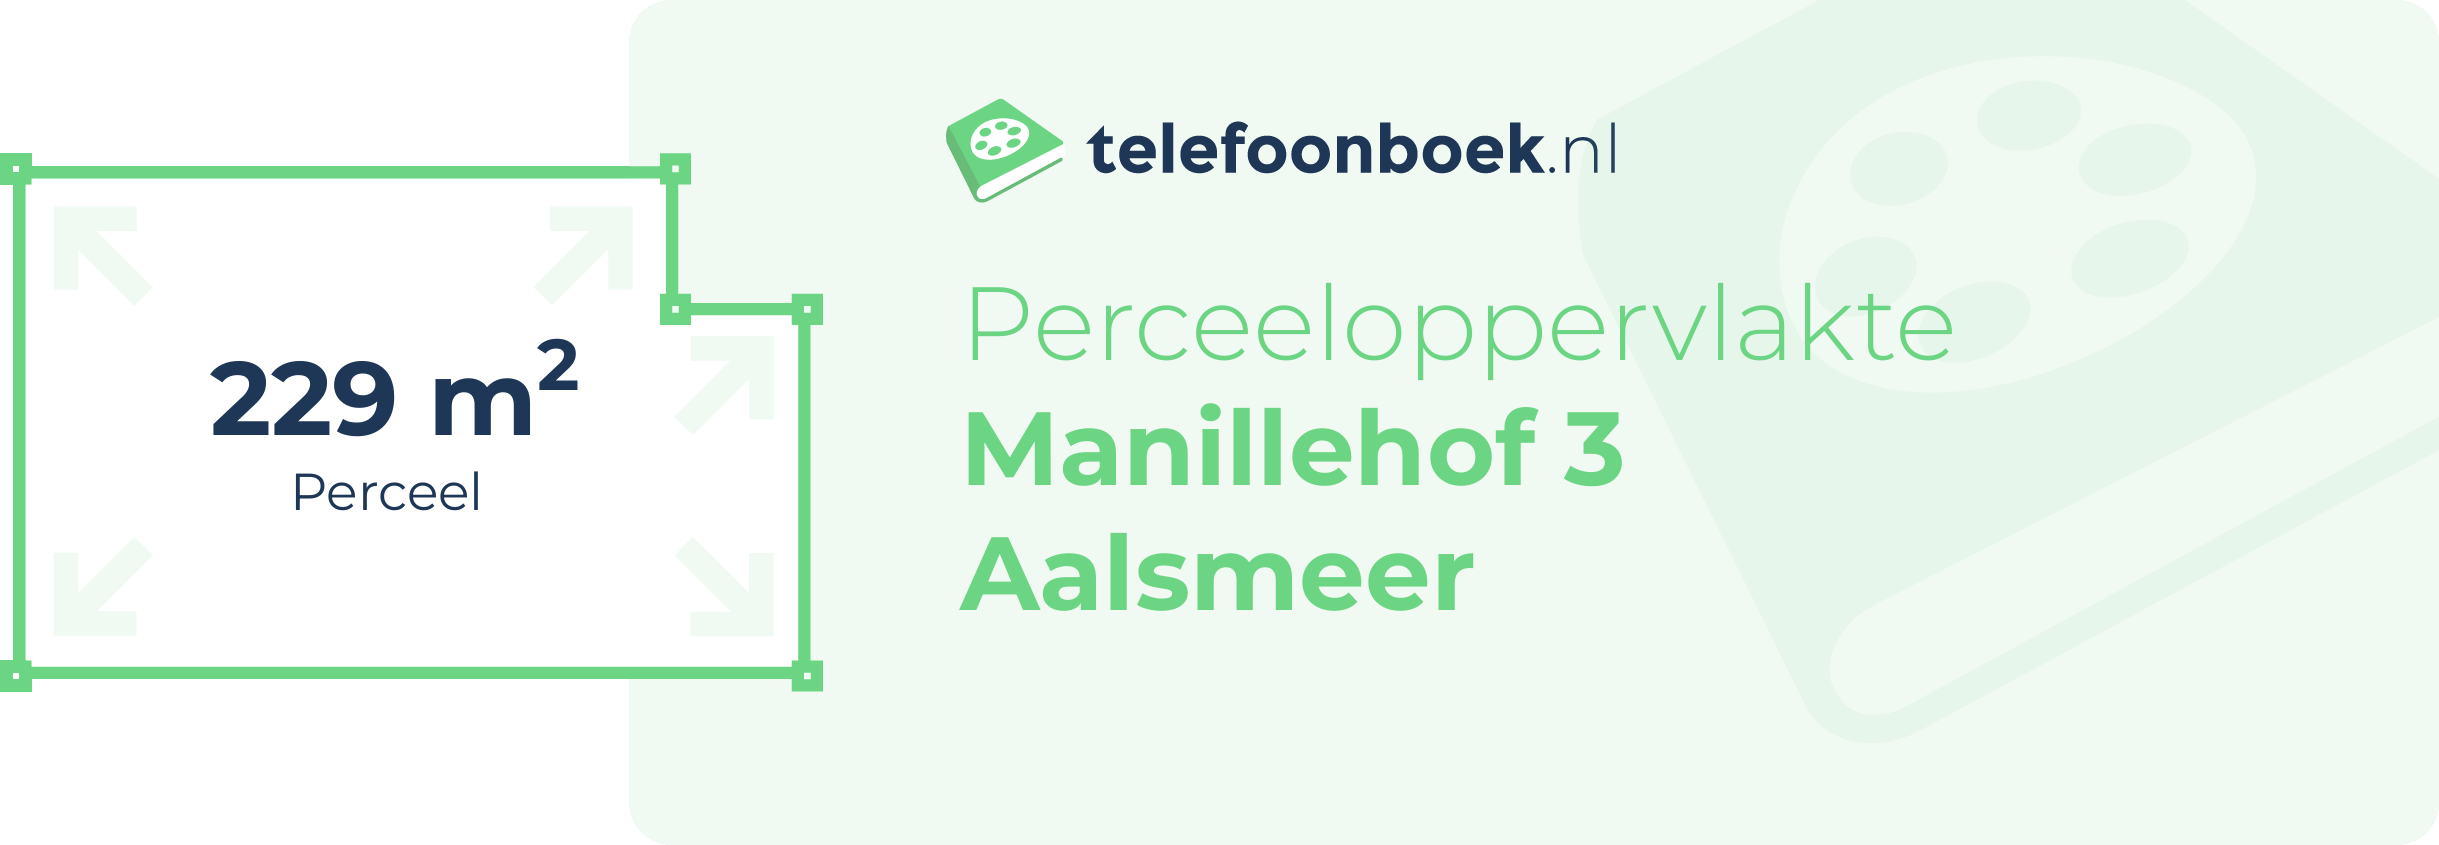 Perceeloppervlakte Manillehof 3 Aalsmeer